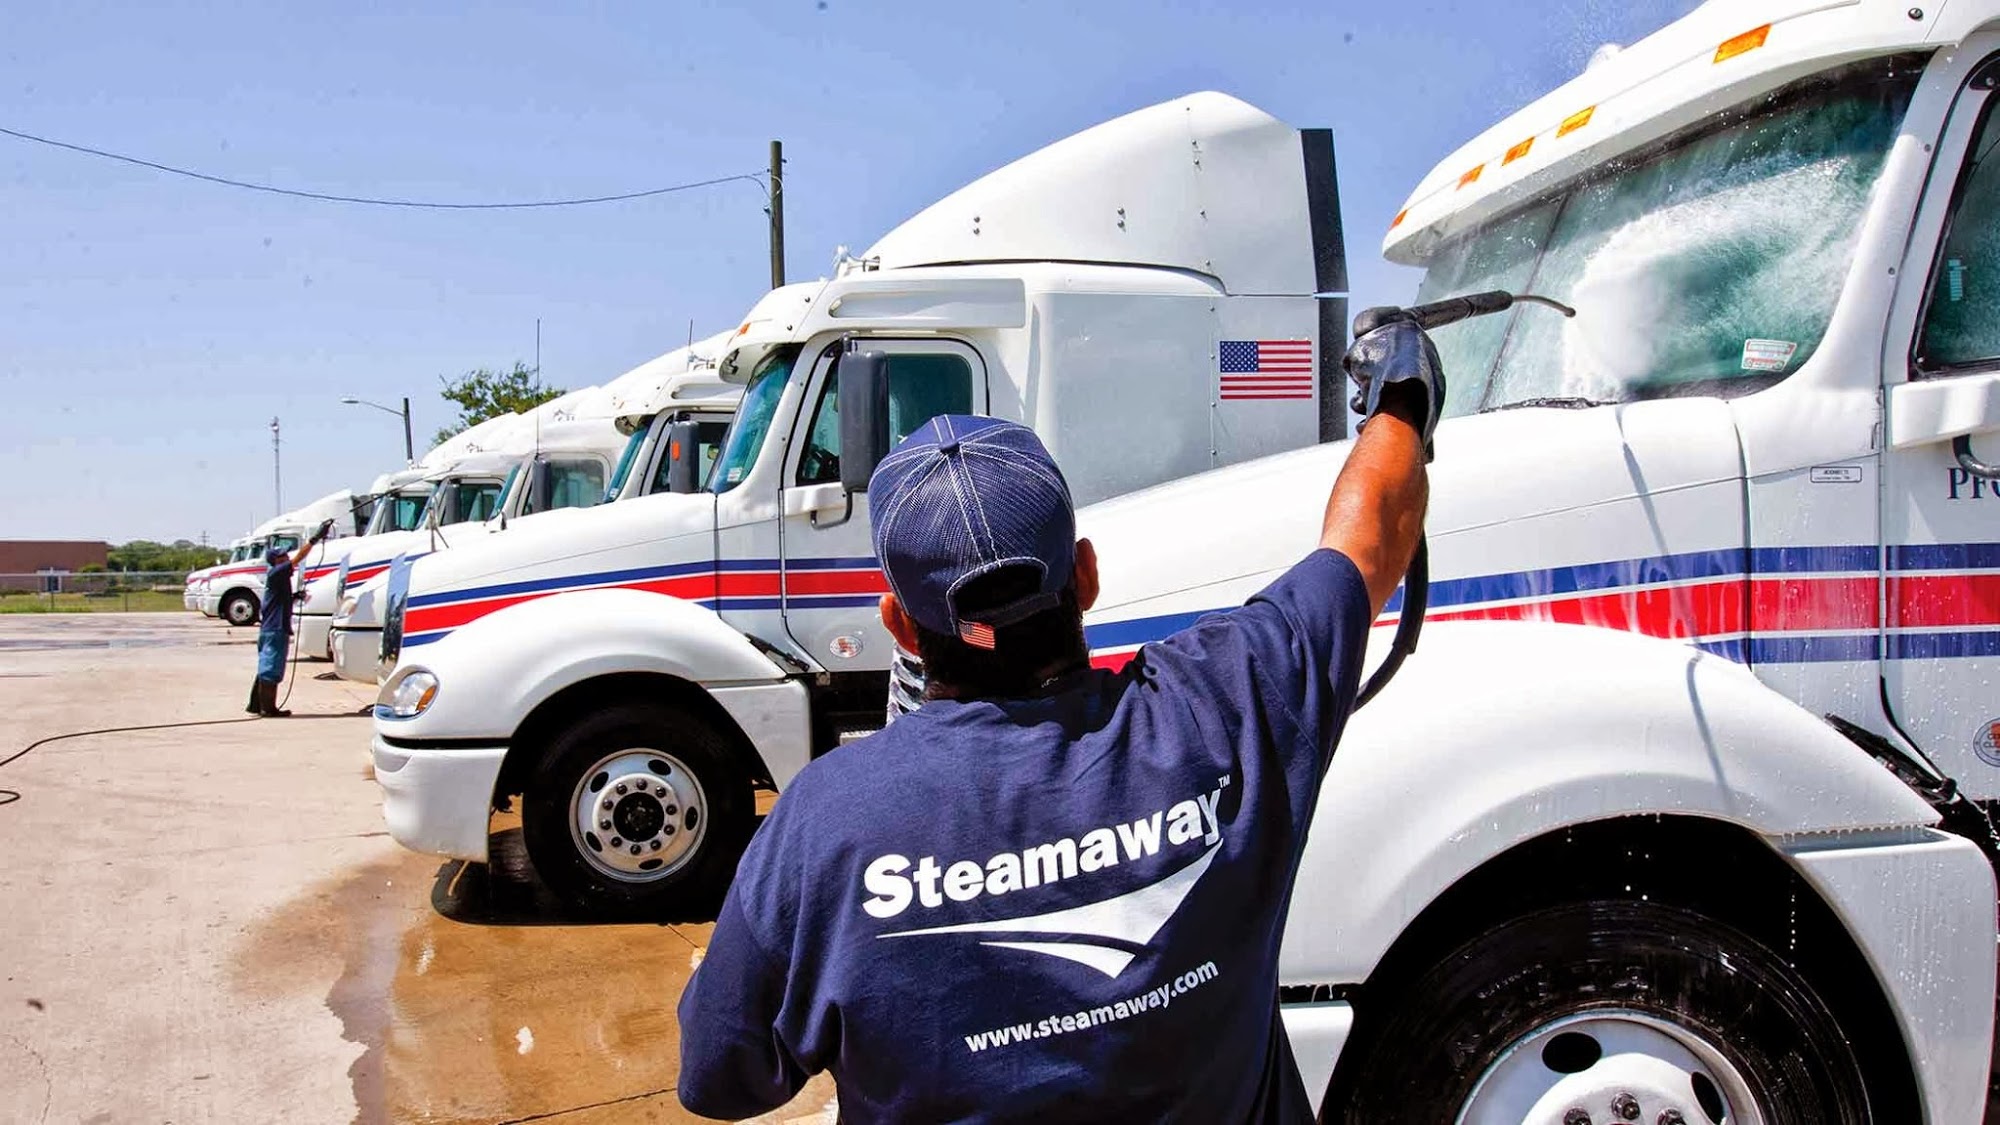 Steamaway, Inc.